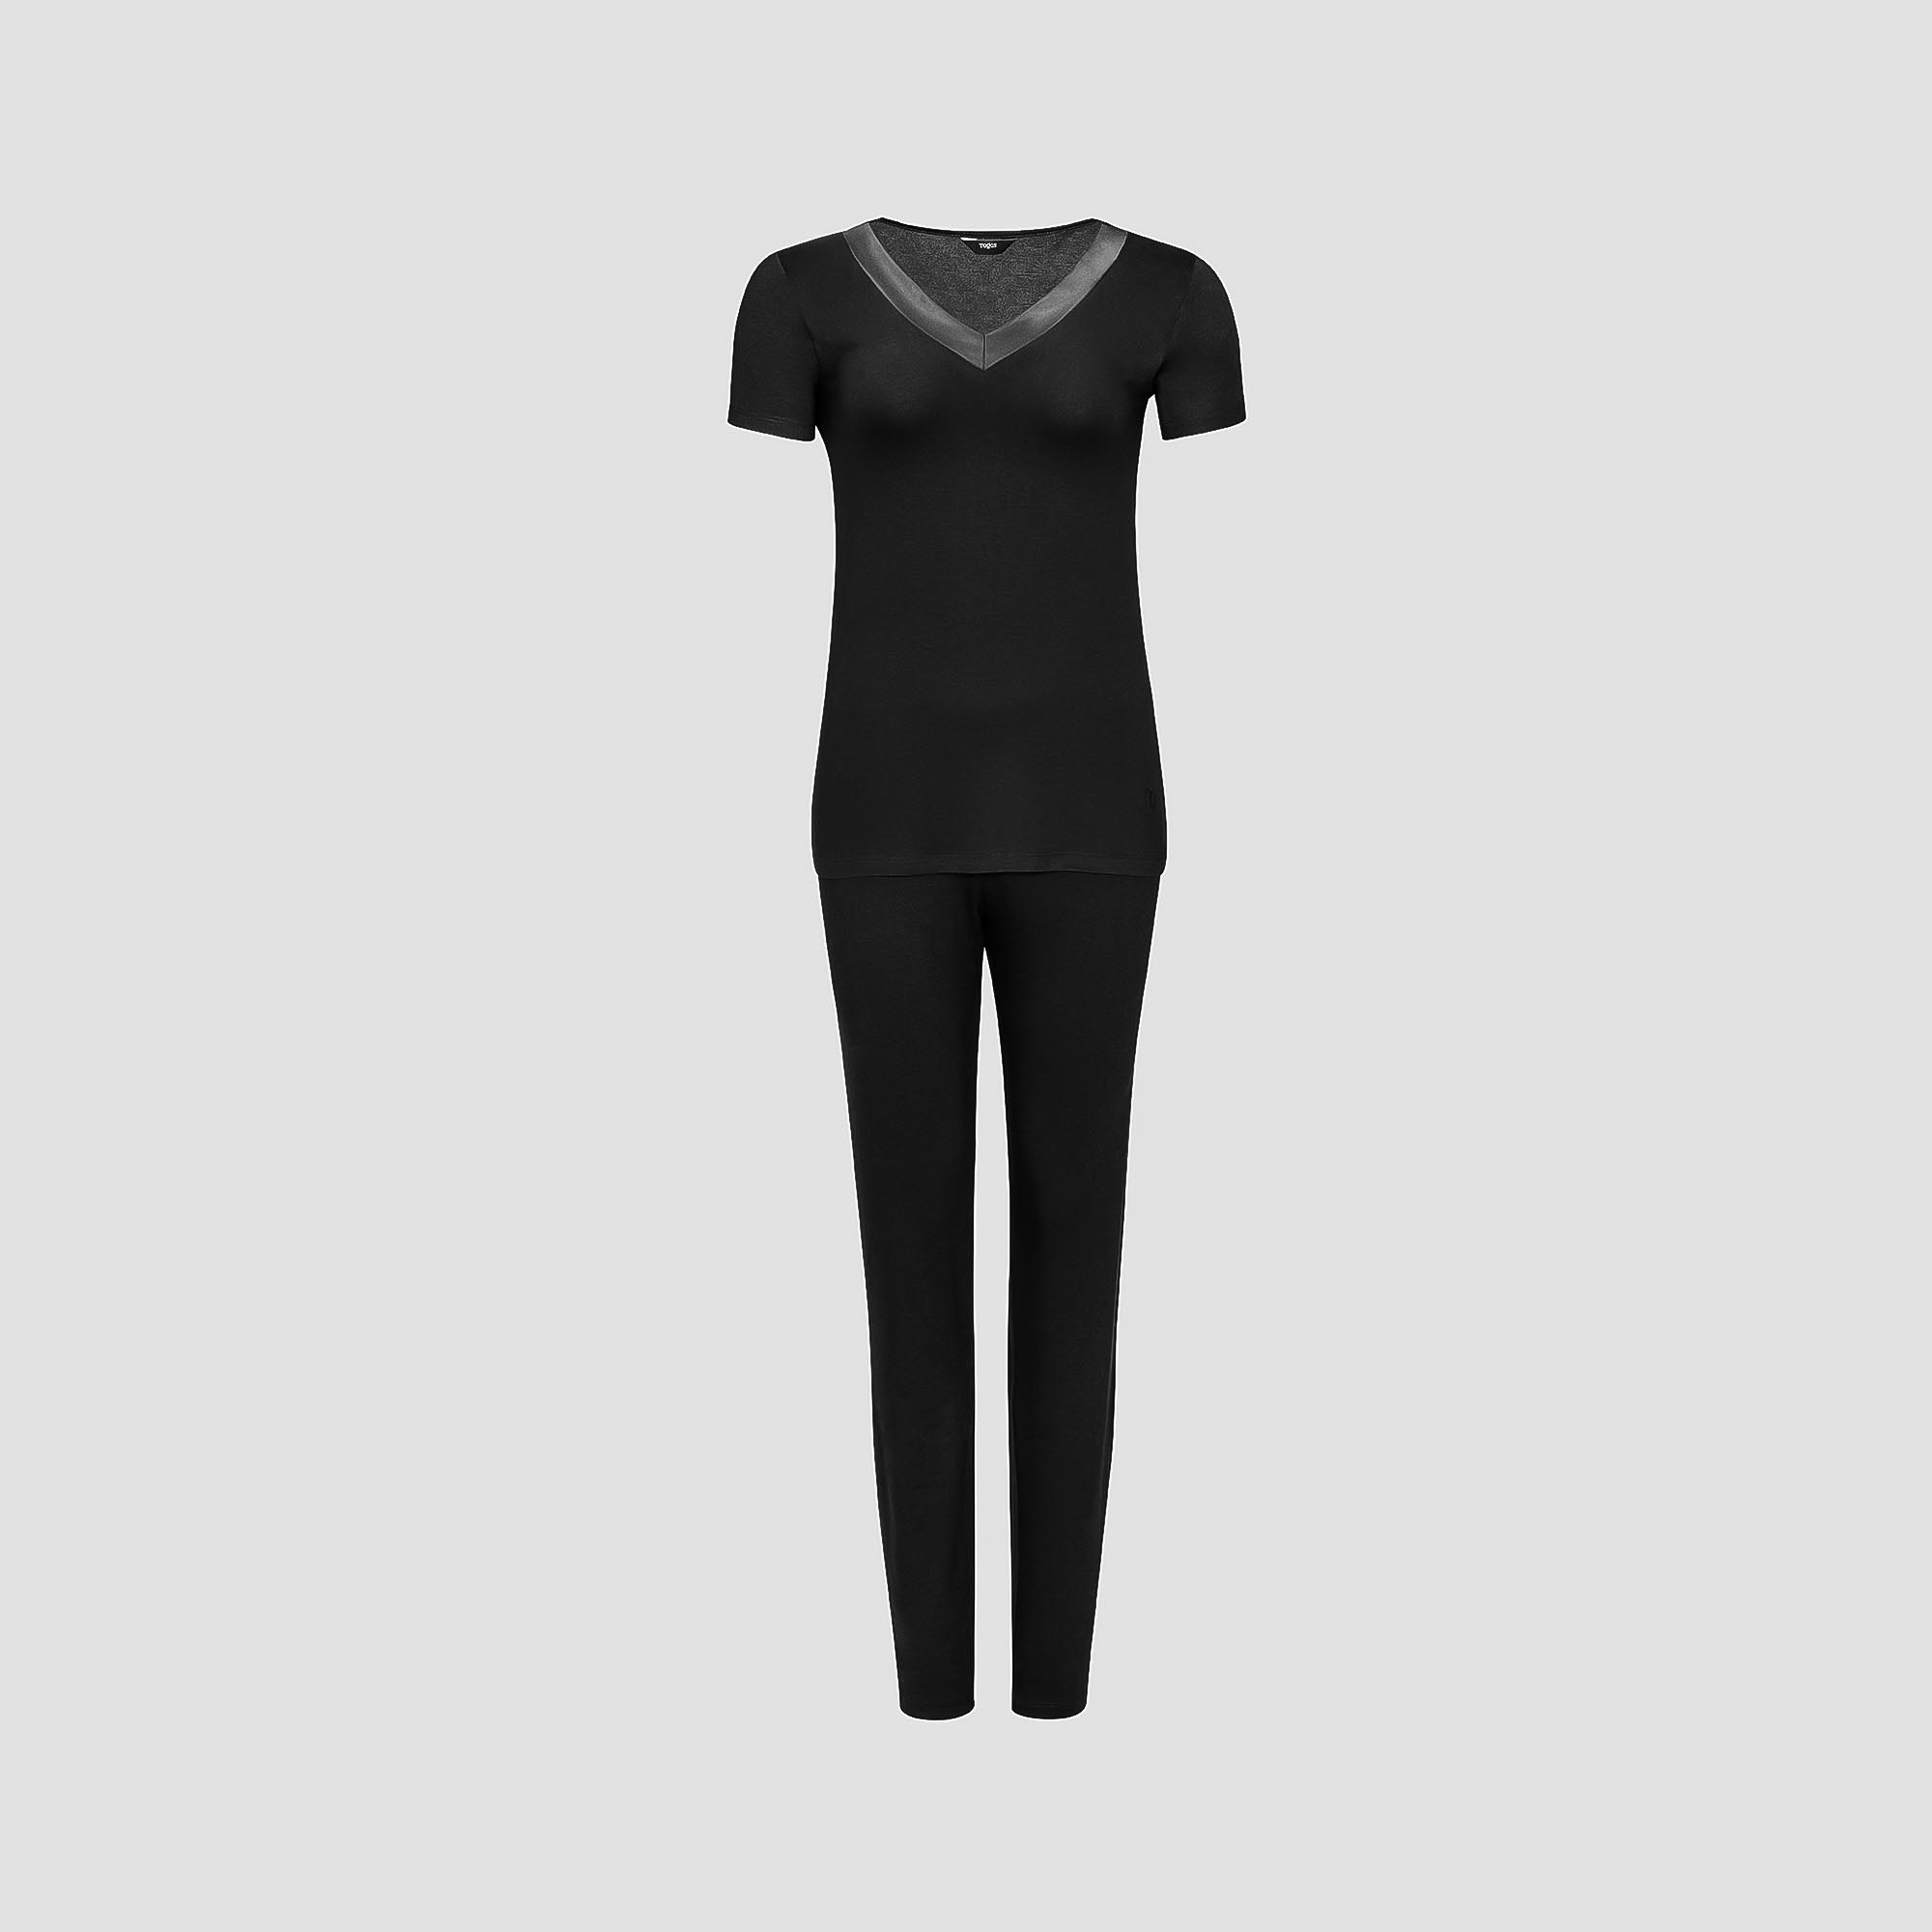 Пижама Togas Ингелла черная женская M(46) 2 предмета пижама футболка